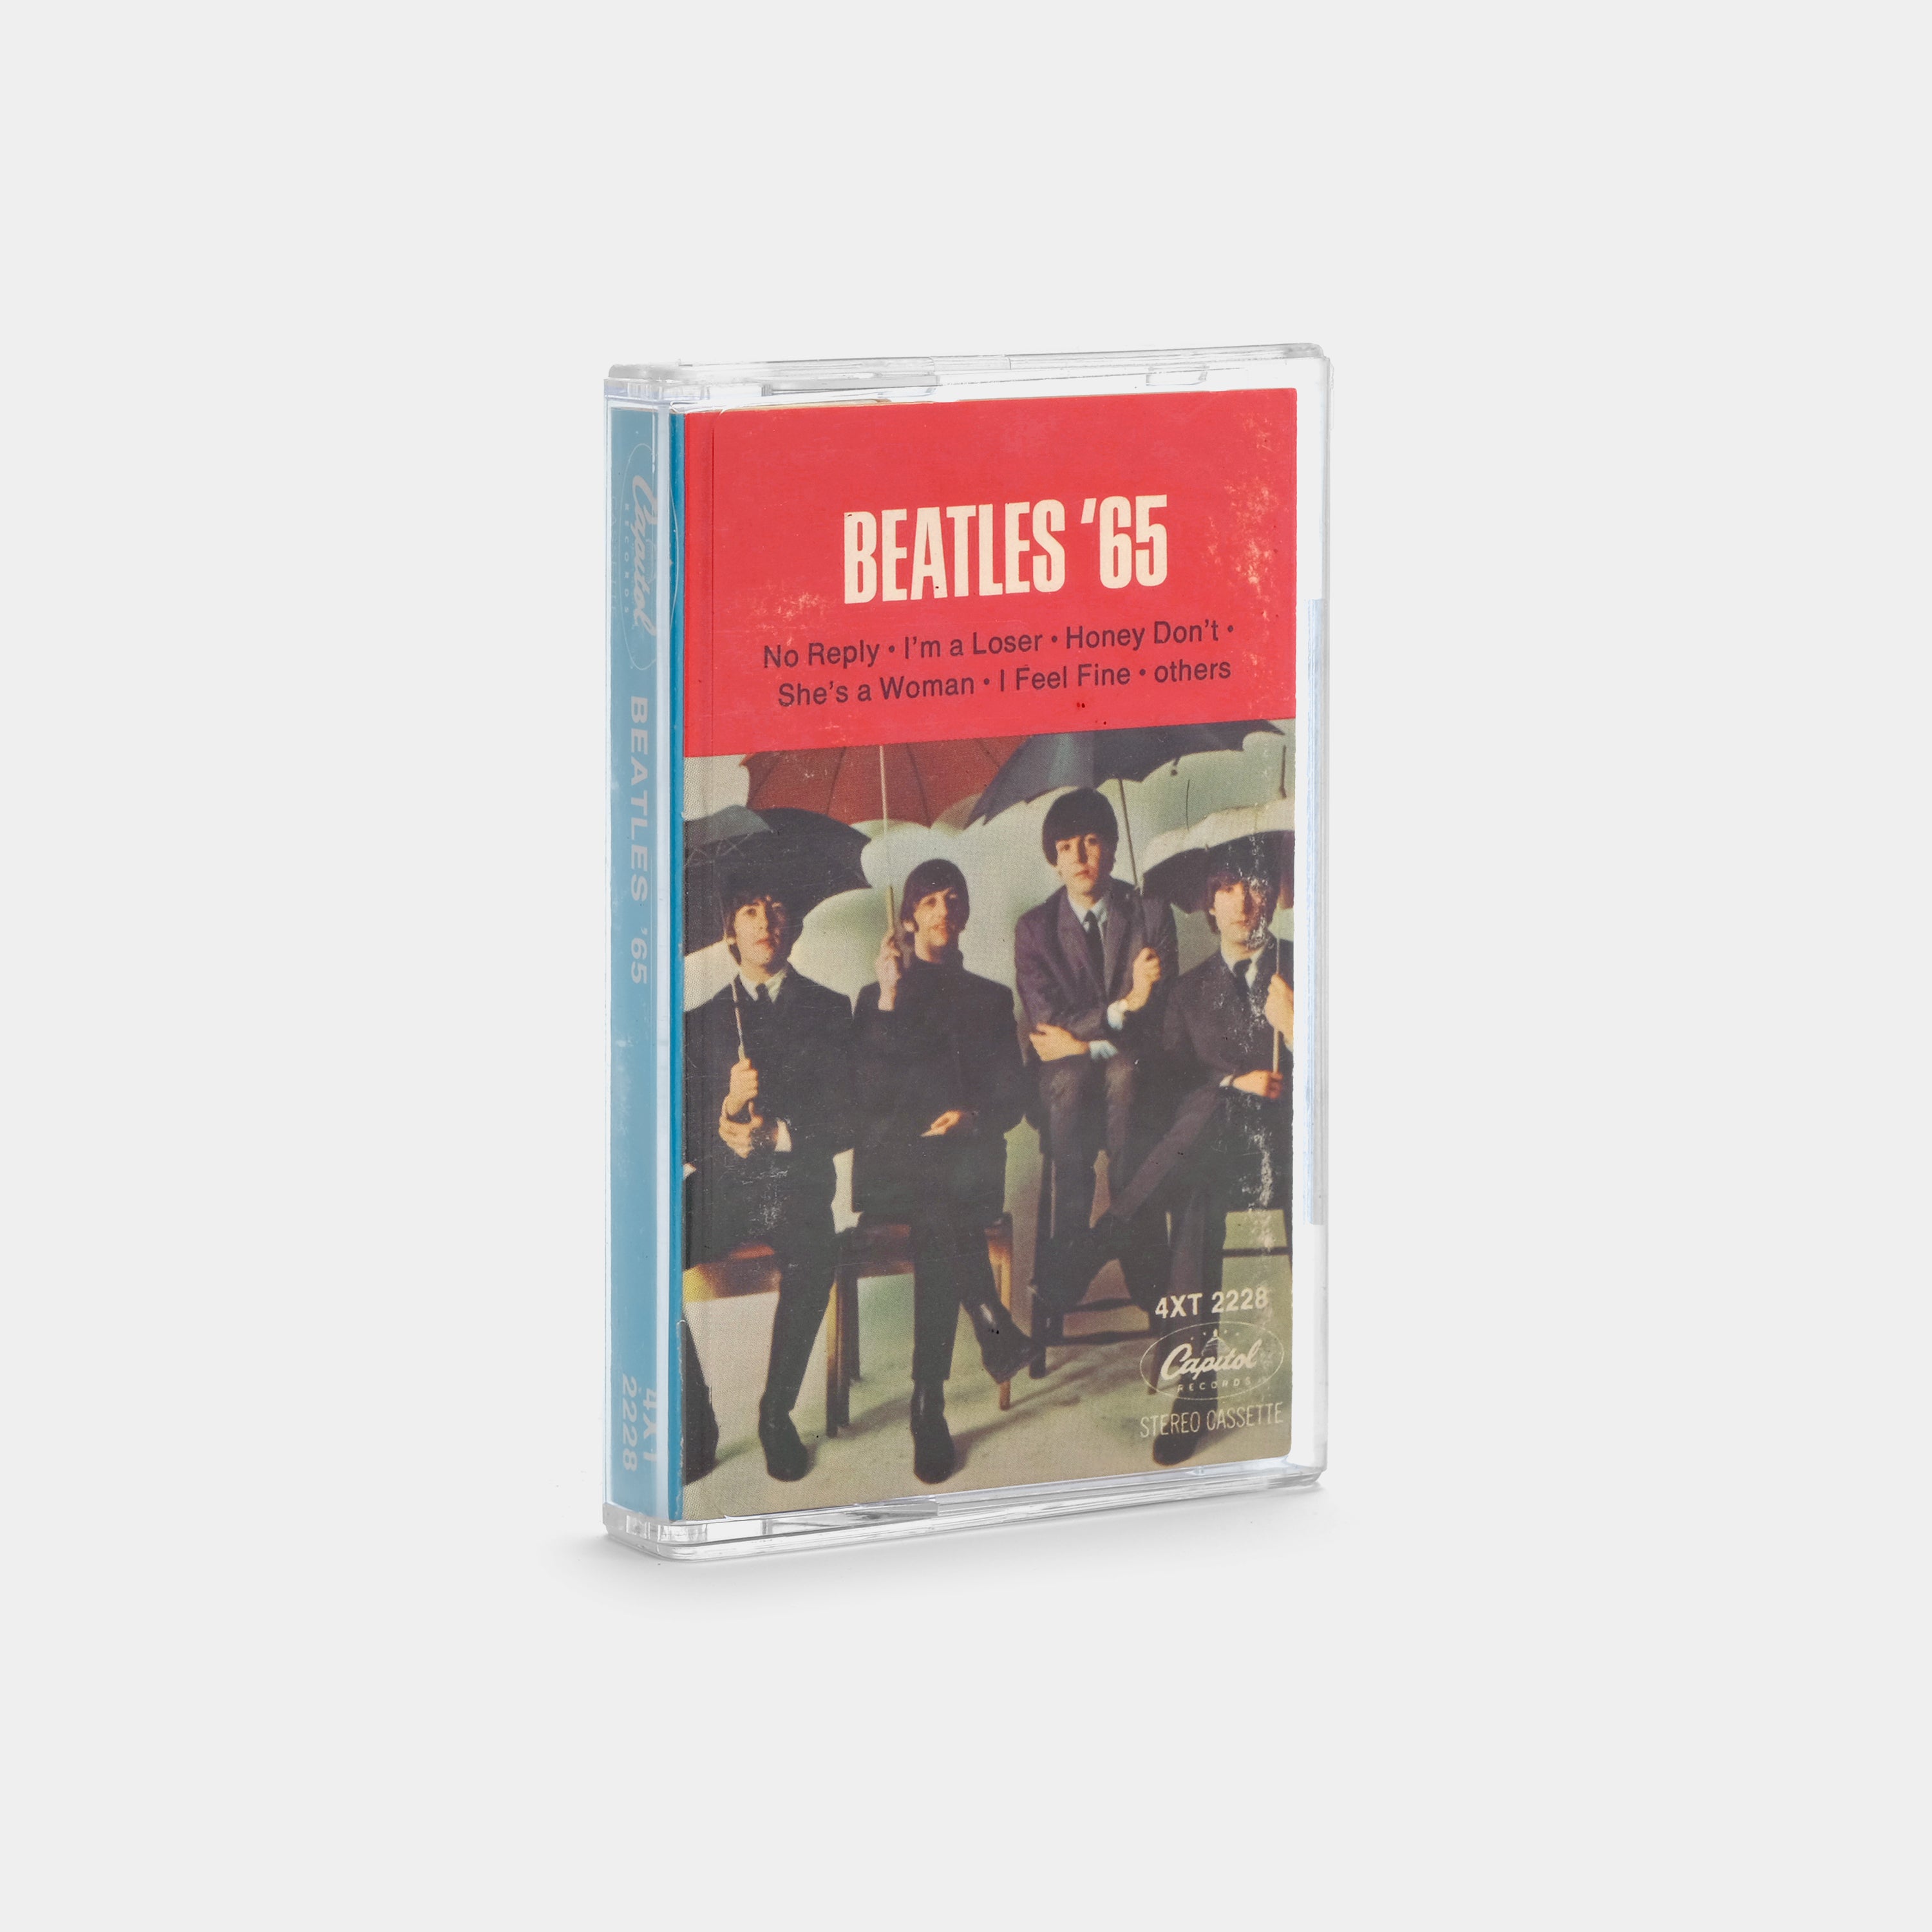 The Beatles - Beatles '65 Cassette Tape